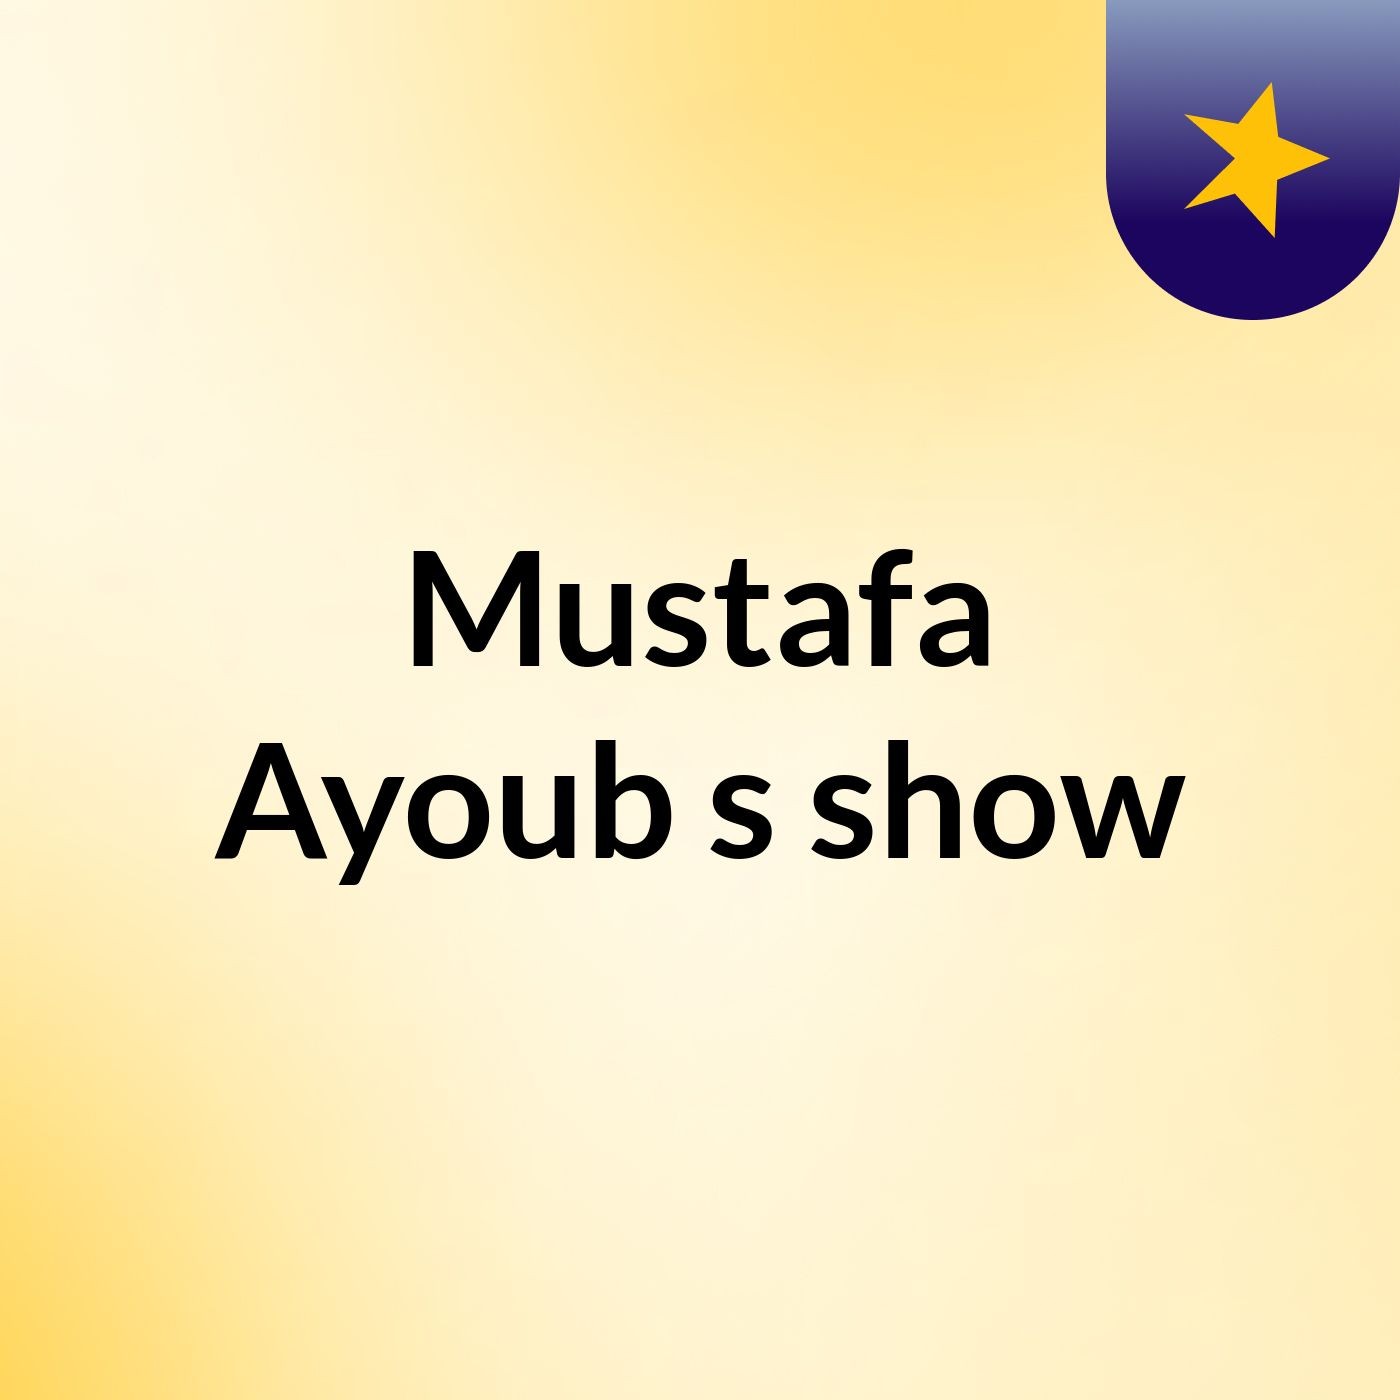 Mustafa Ayoub's show